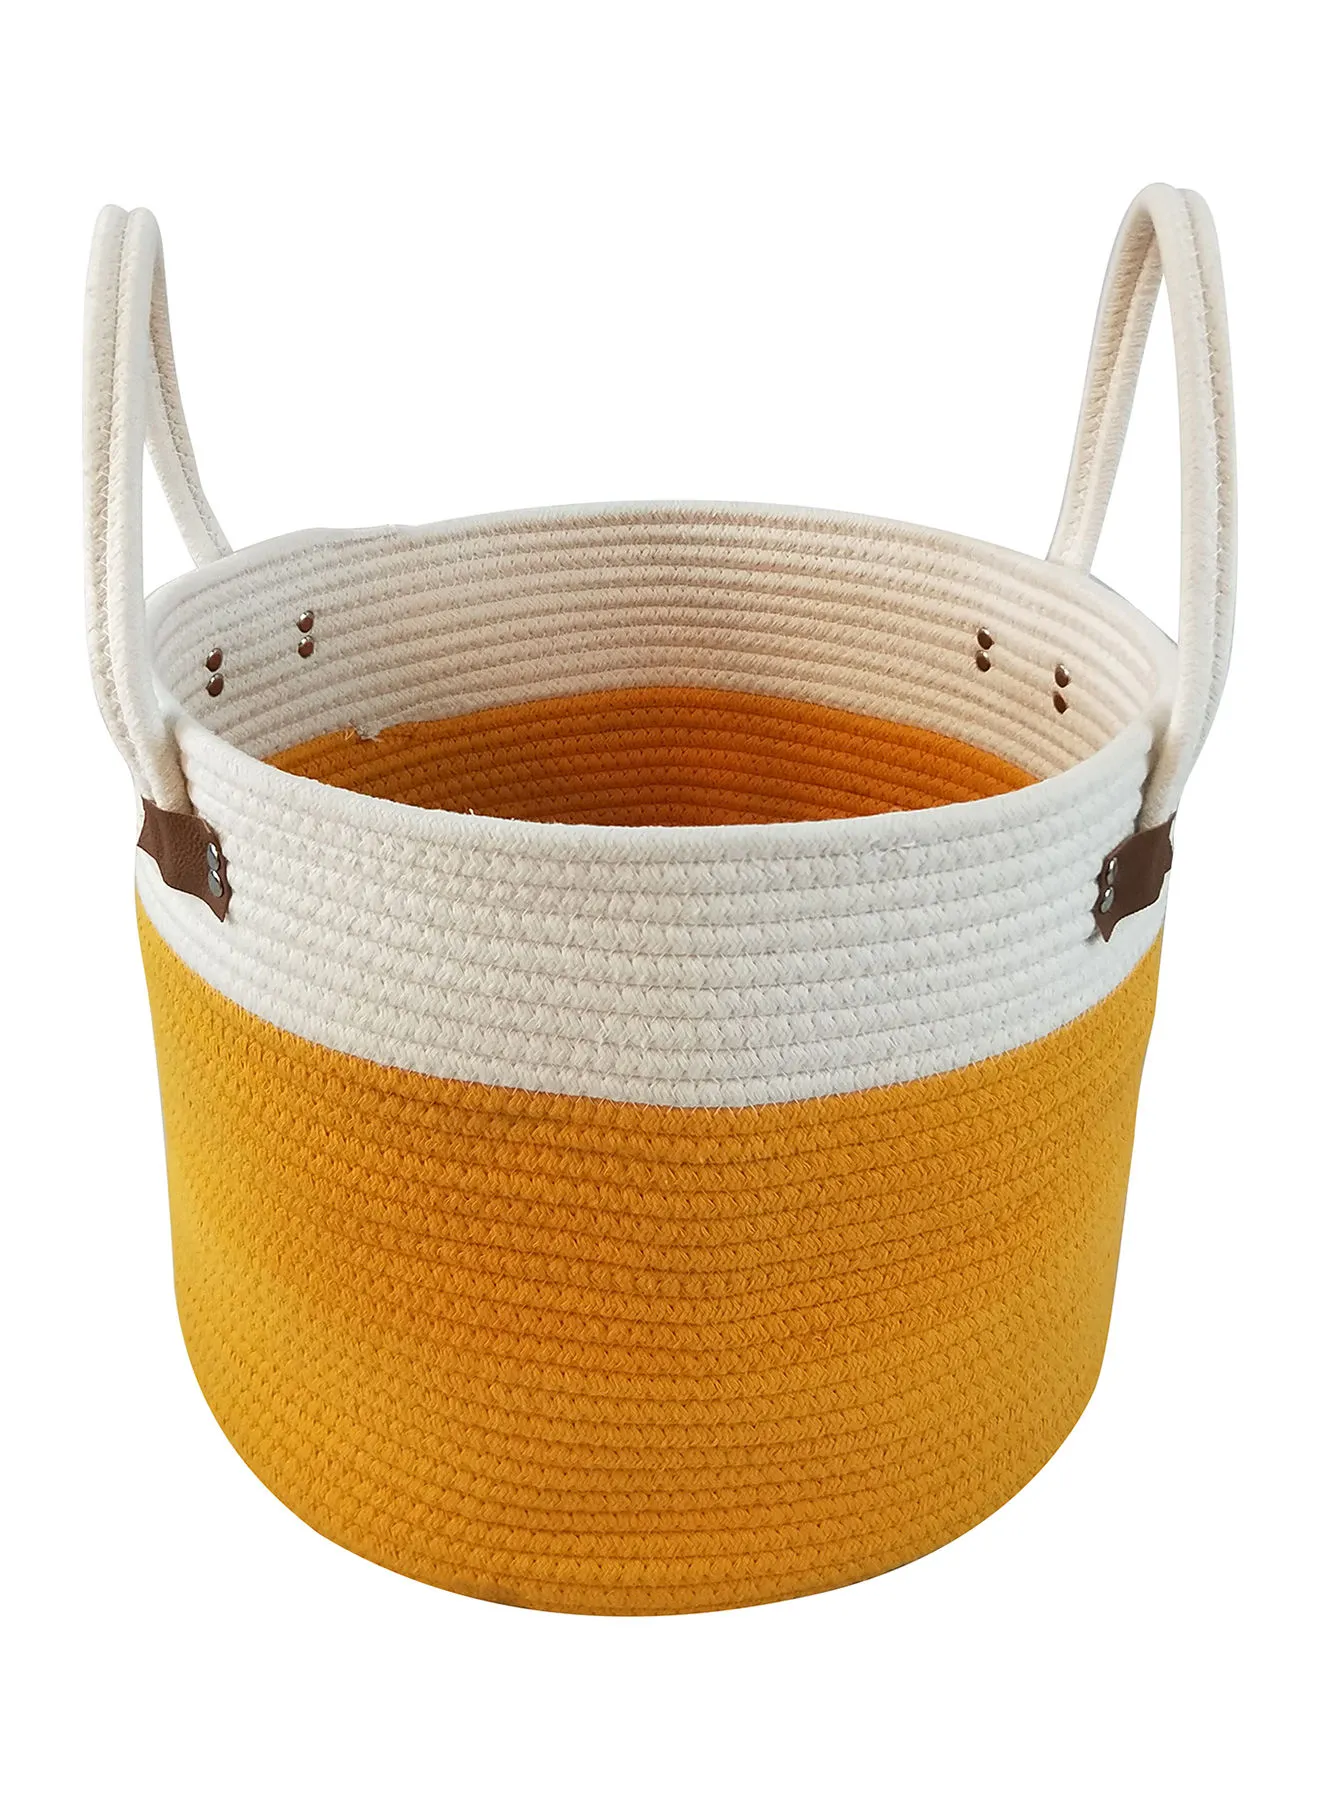 Amal Handmade Cotton Rope Laundry Basket WL2021 - 1034 White/Yellow 22cm